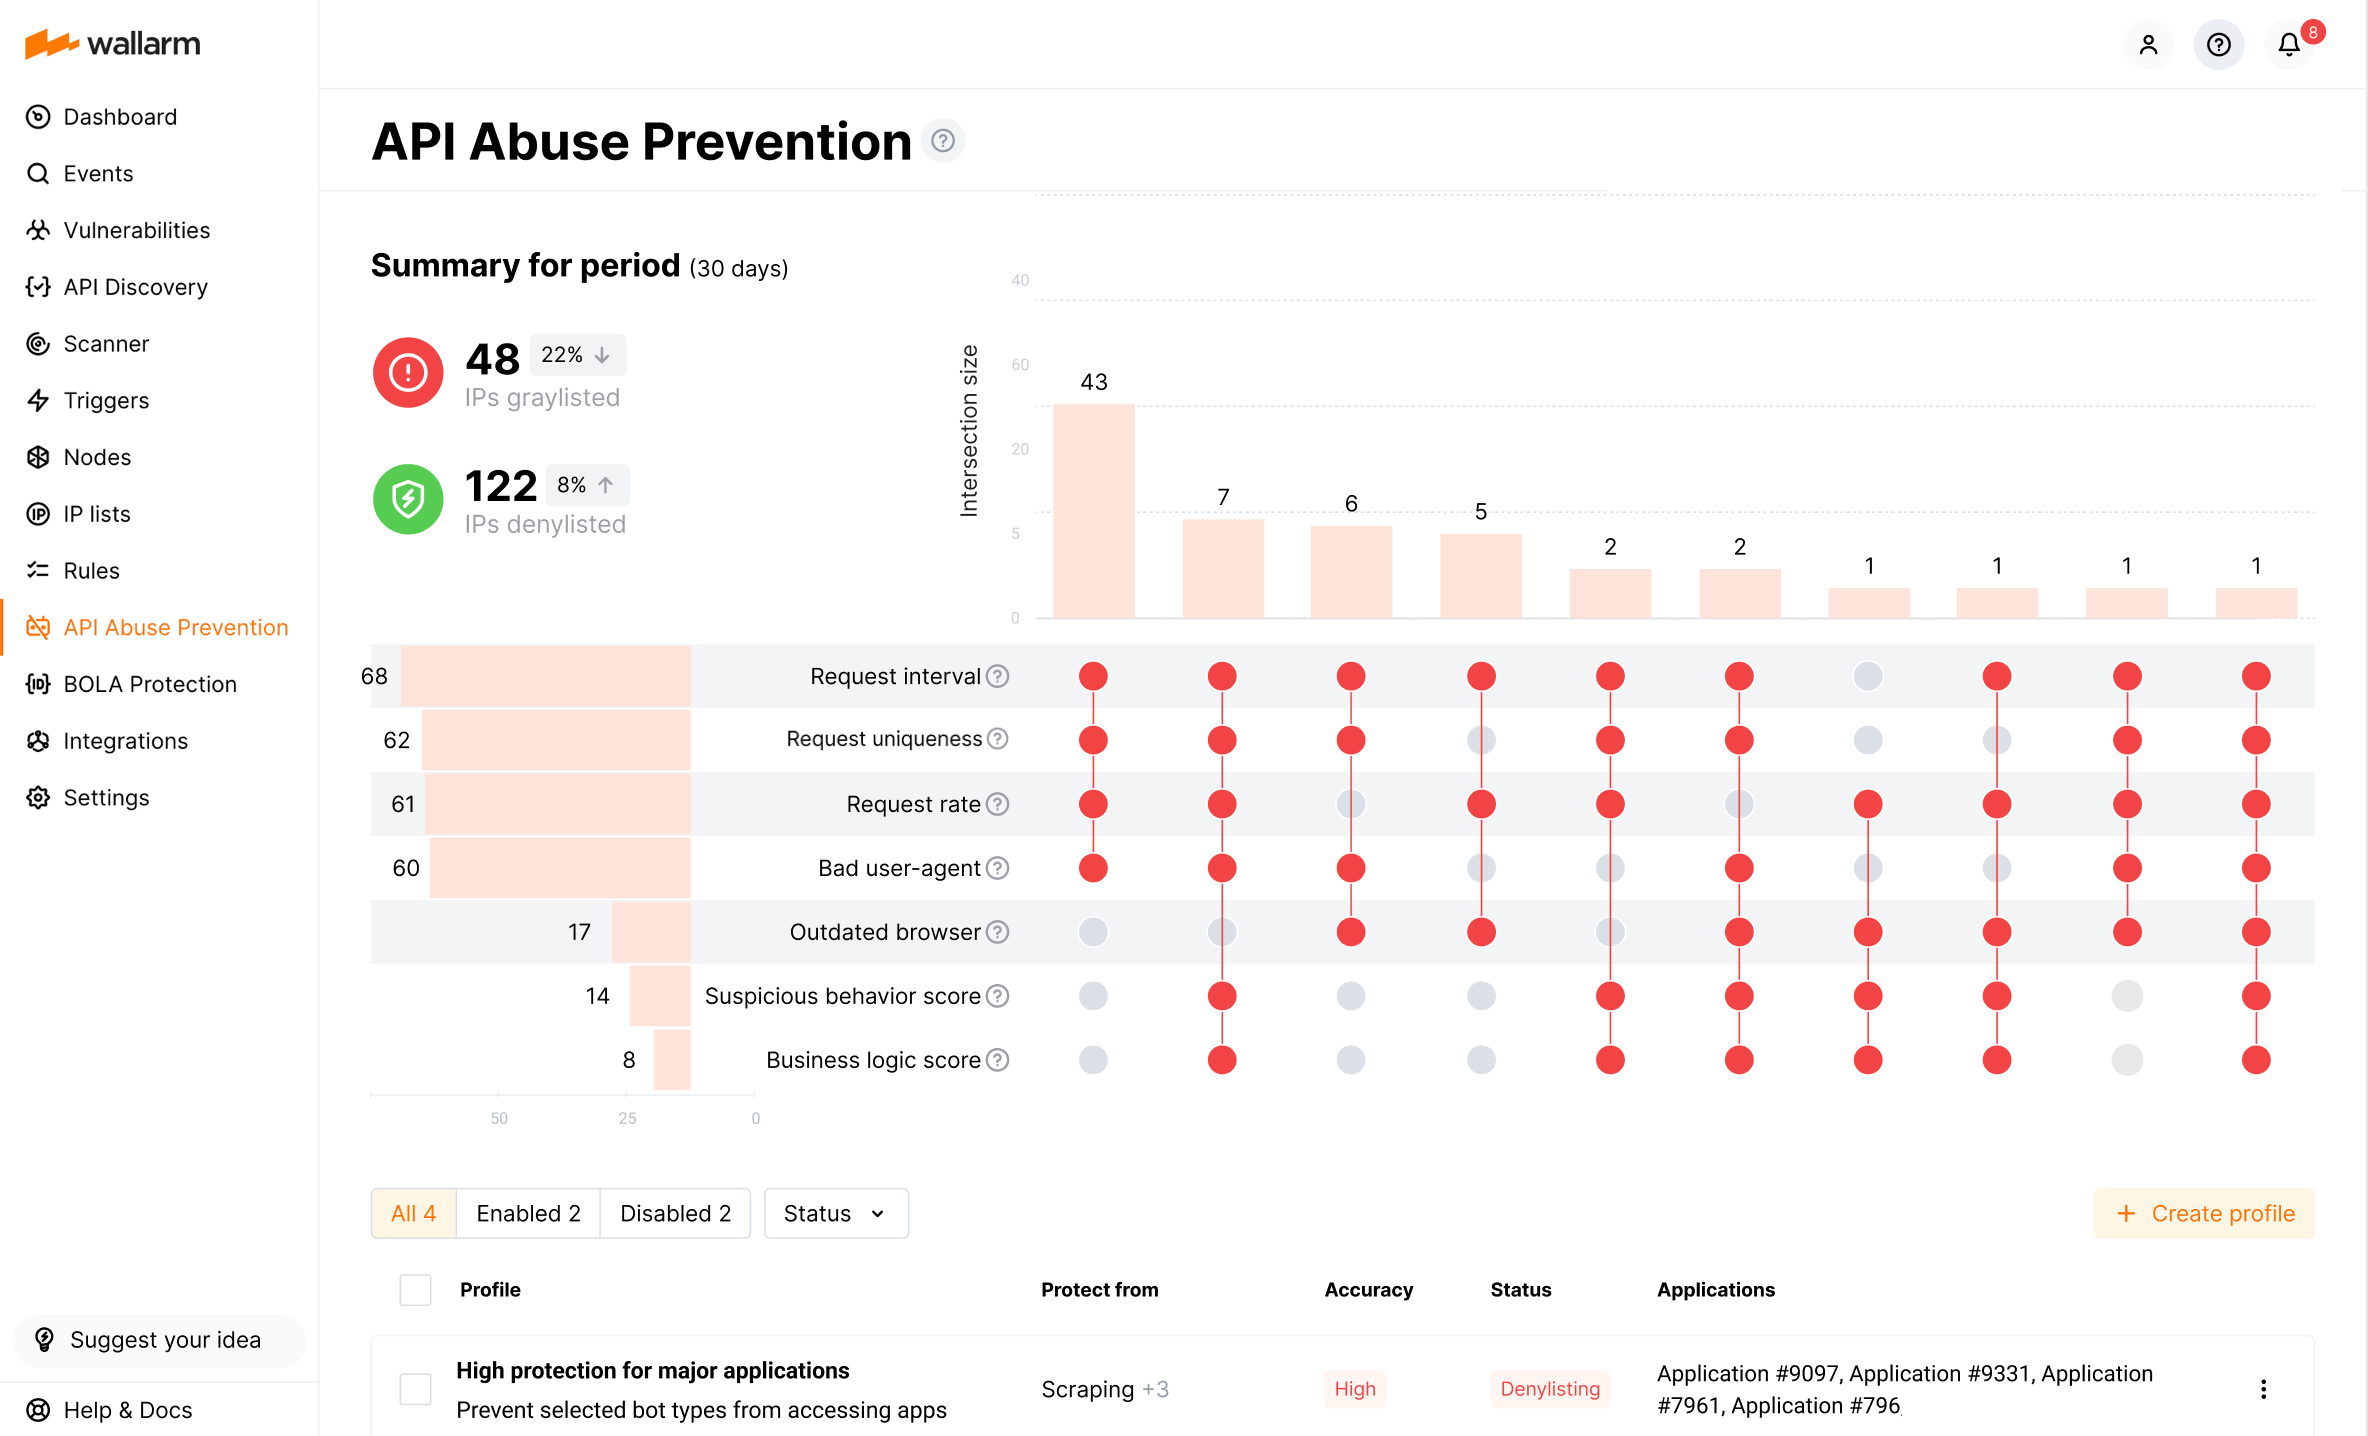 API abuse prevention statistics